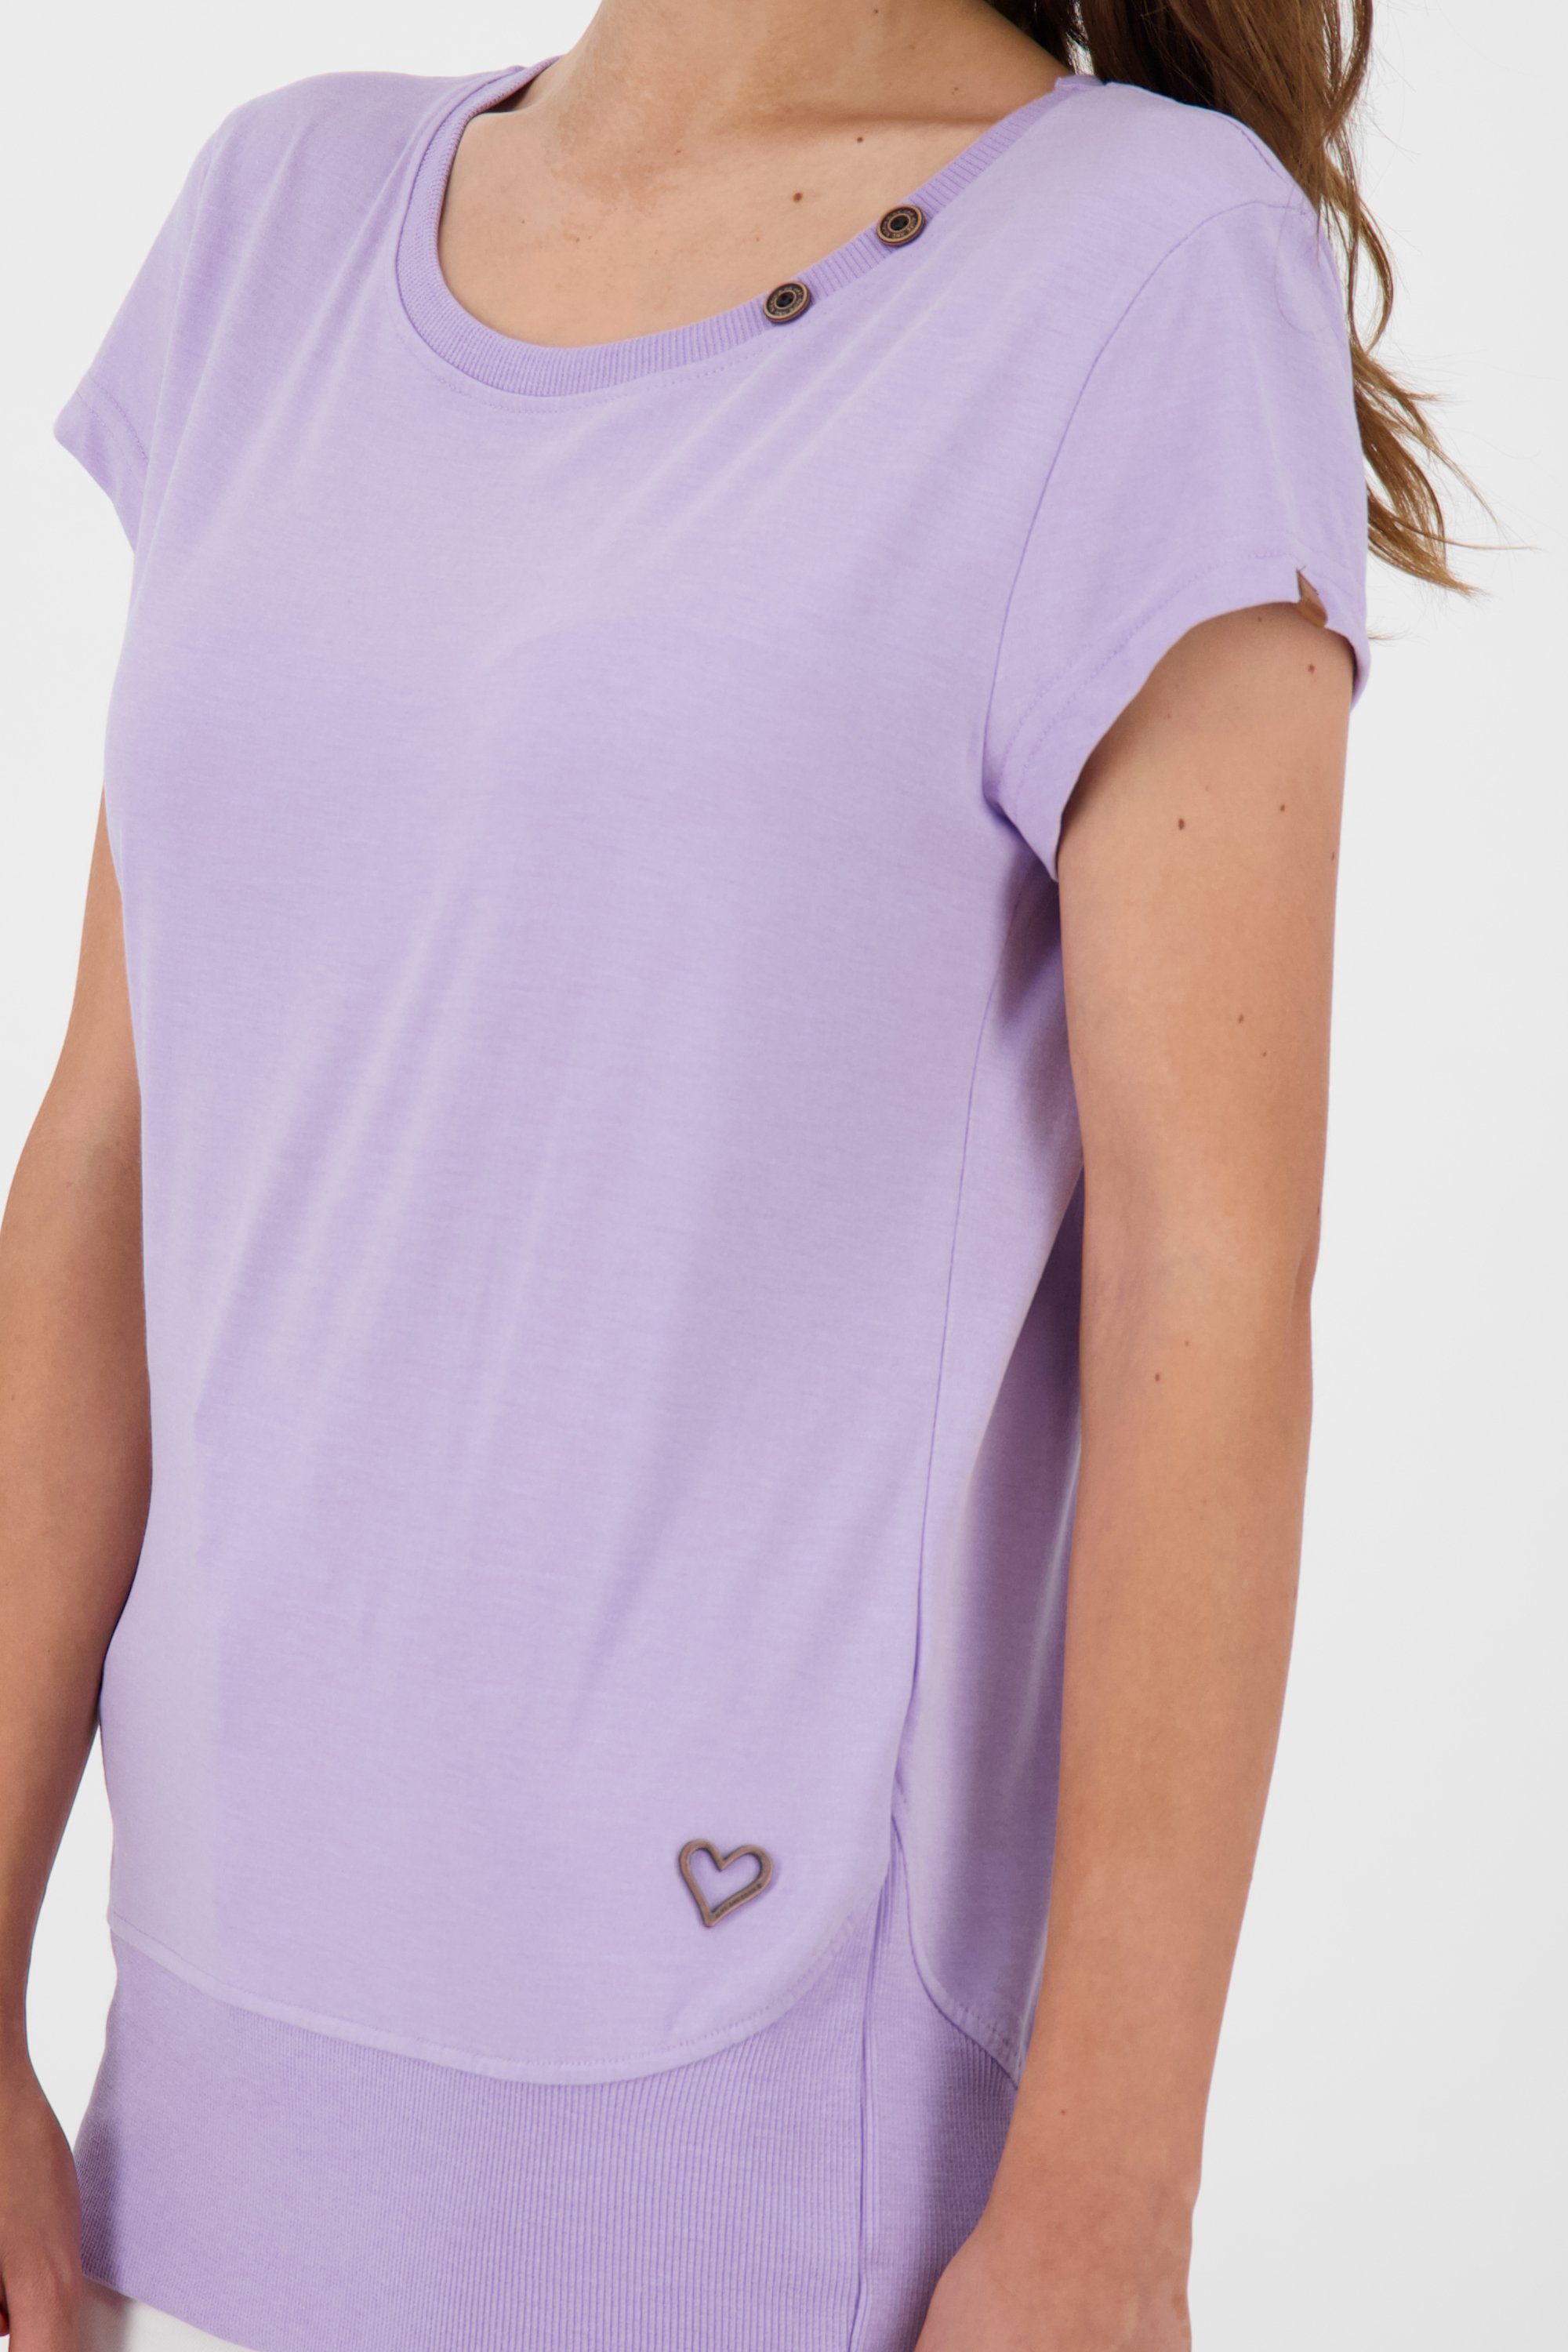 CocoAK Damen A T-Shirt Alife Kickin lavender Shirt T-Shirt &